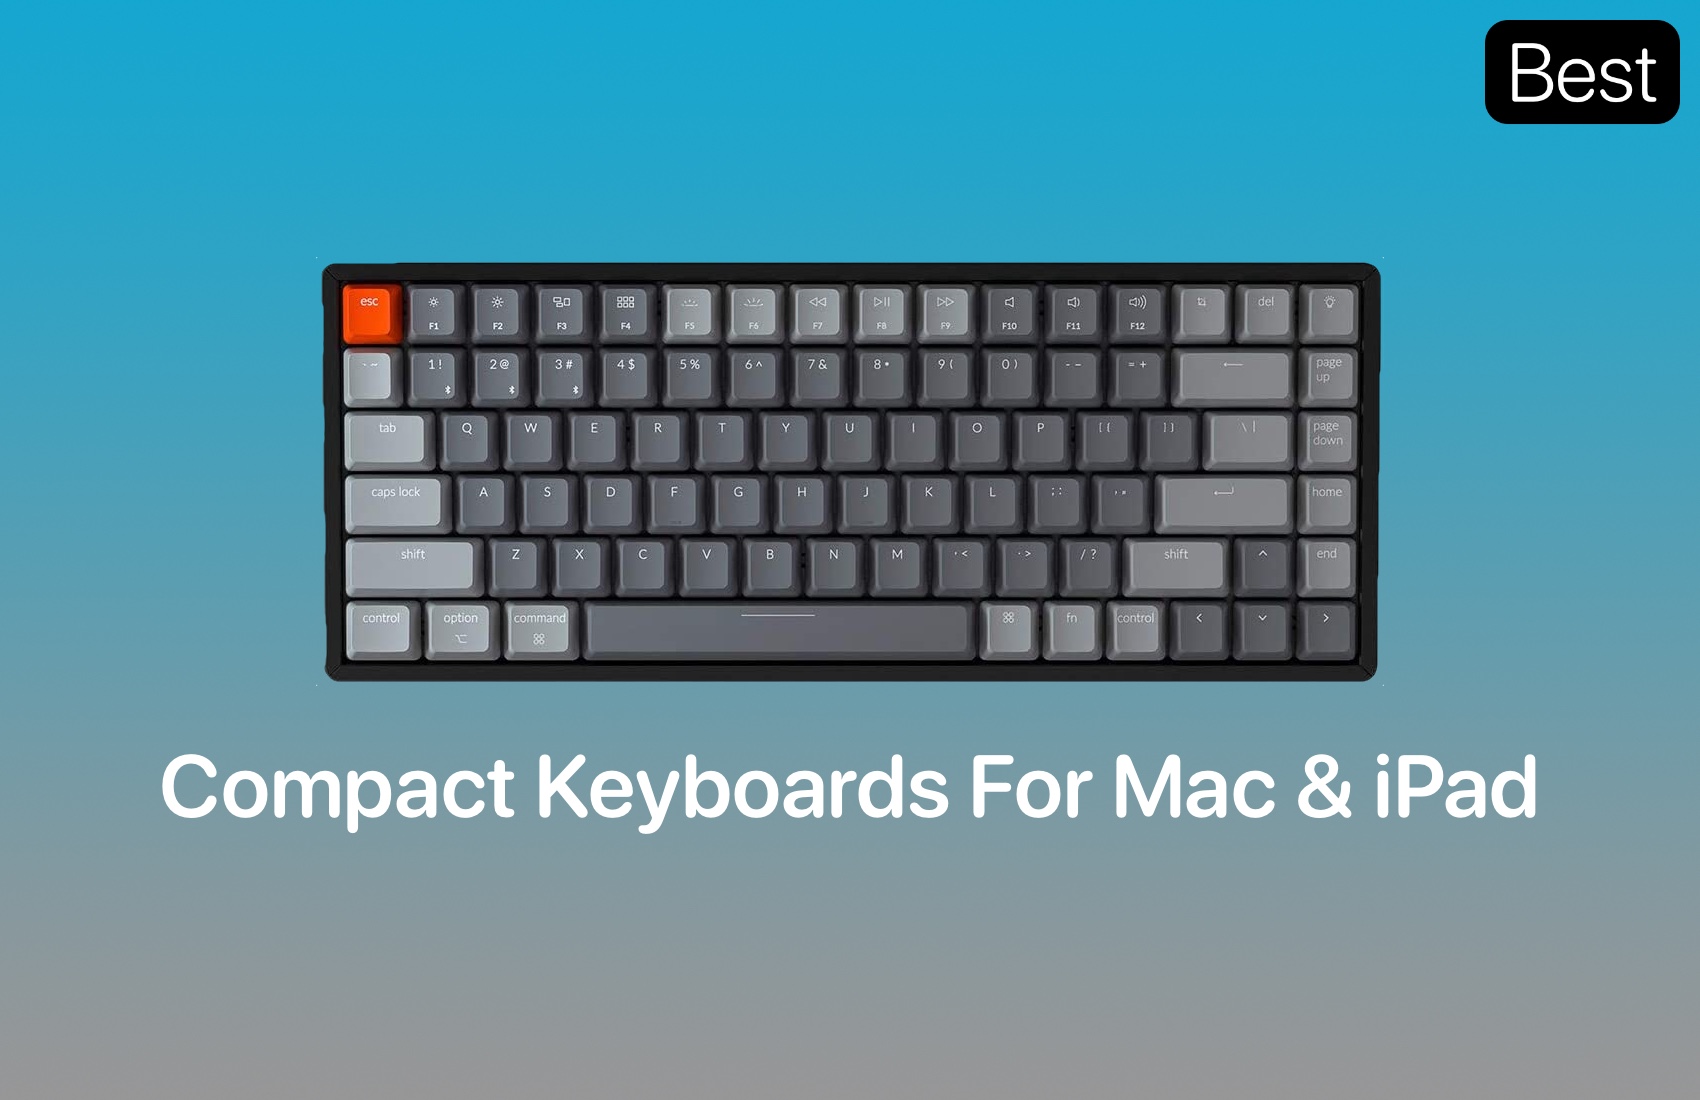 Backlit Wired Keyboard for Mac - Familiar Layout, Enhanced